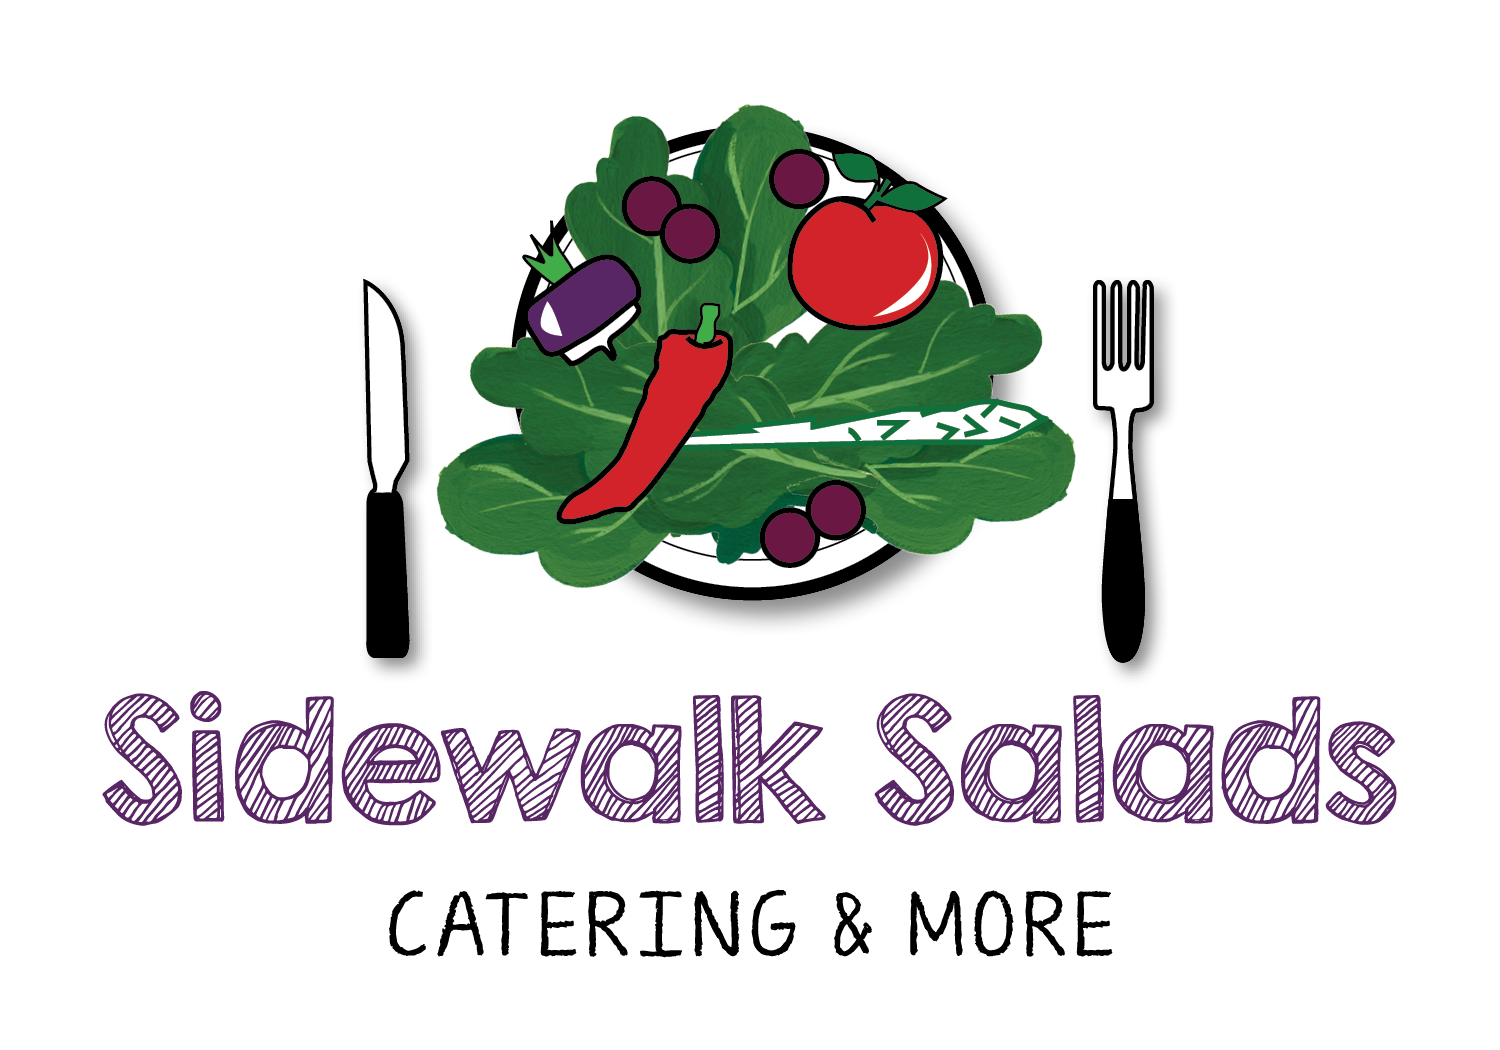 Sidewalk Salads